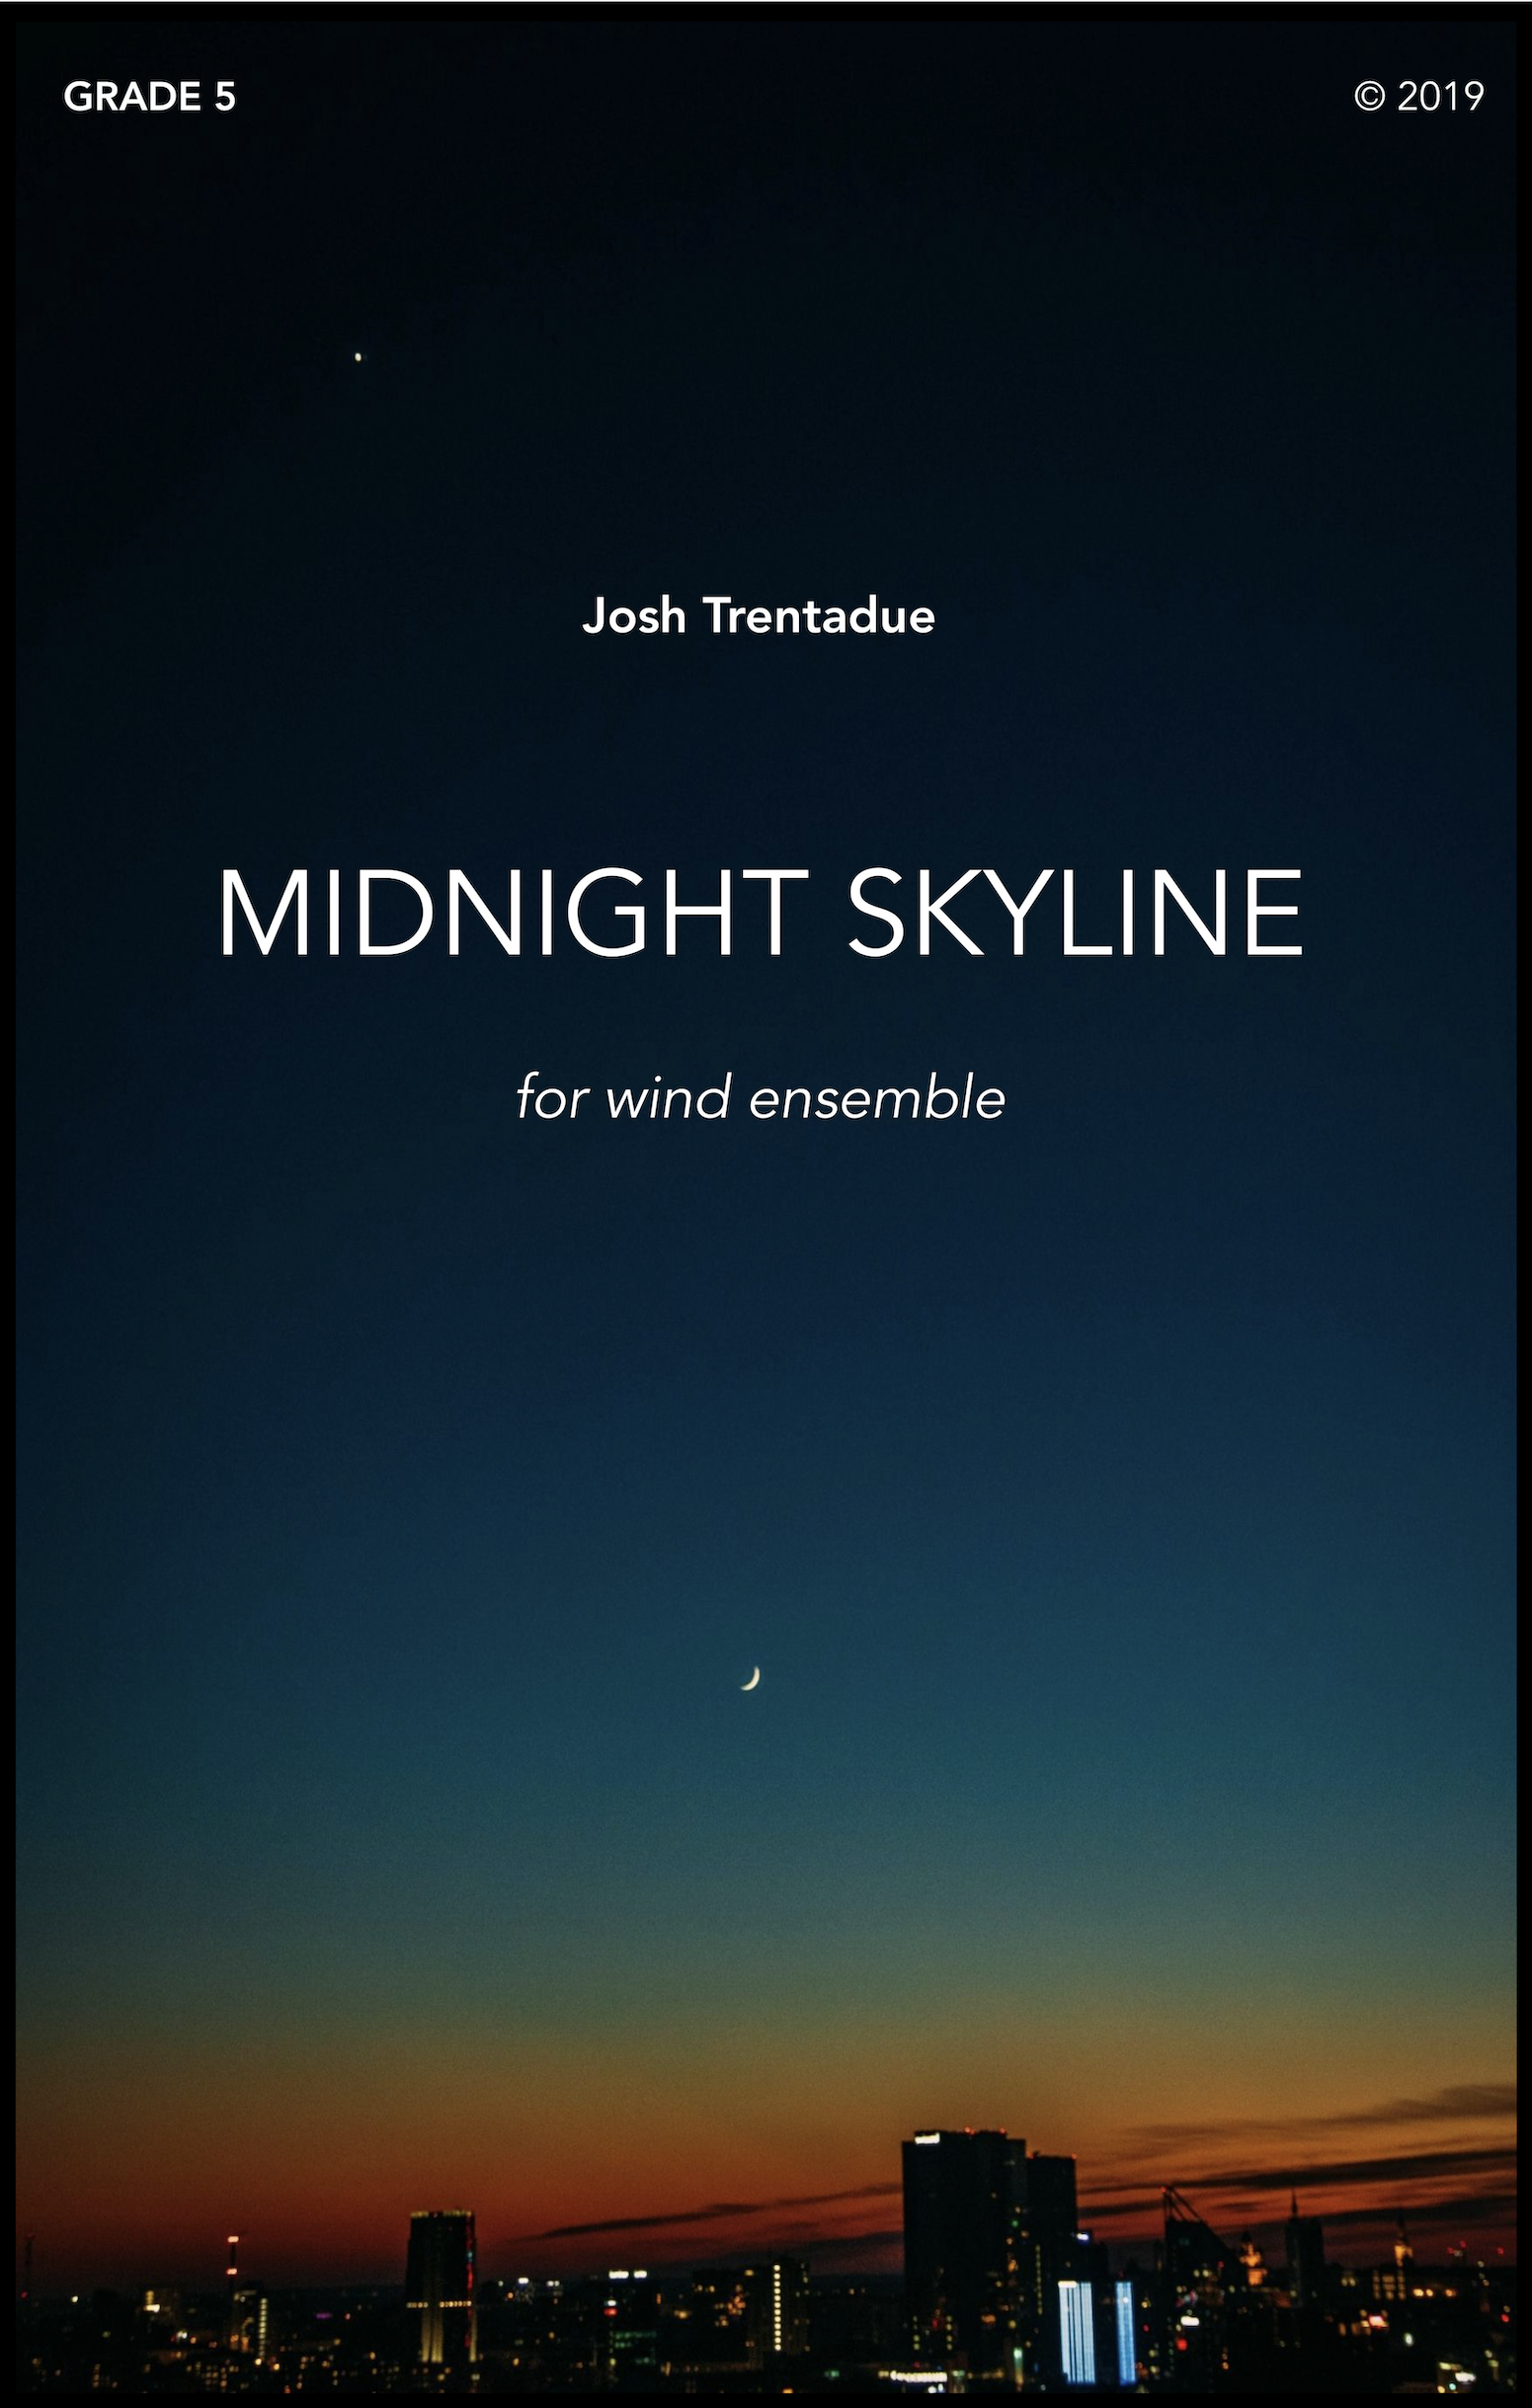 Midnight Skyline (Score Only) by Josh Trentadue